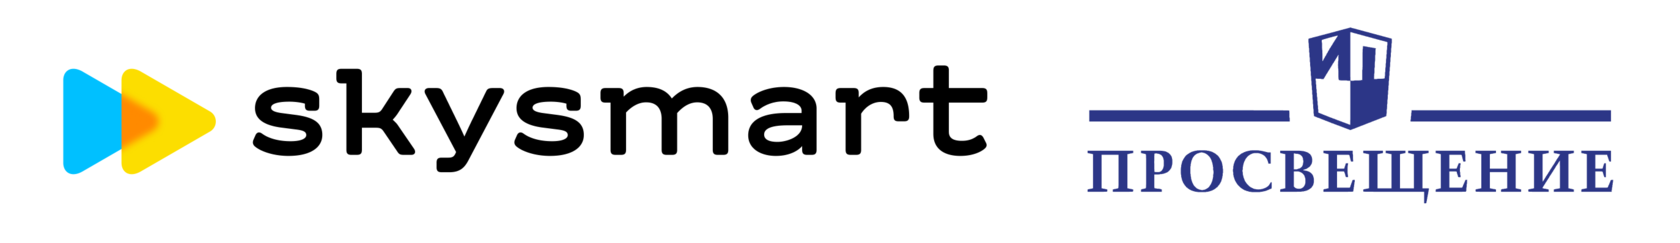 Https edu eva. SKYSMART. SKYSMART лого. Интерактивная тетрадь Sky Smart. Интерактивная рабочая тетрадь SKYSMART.